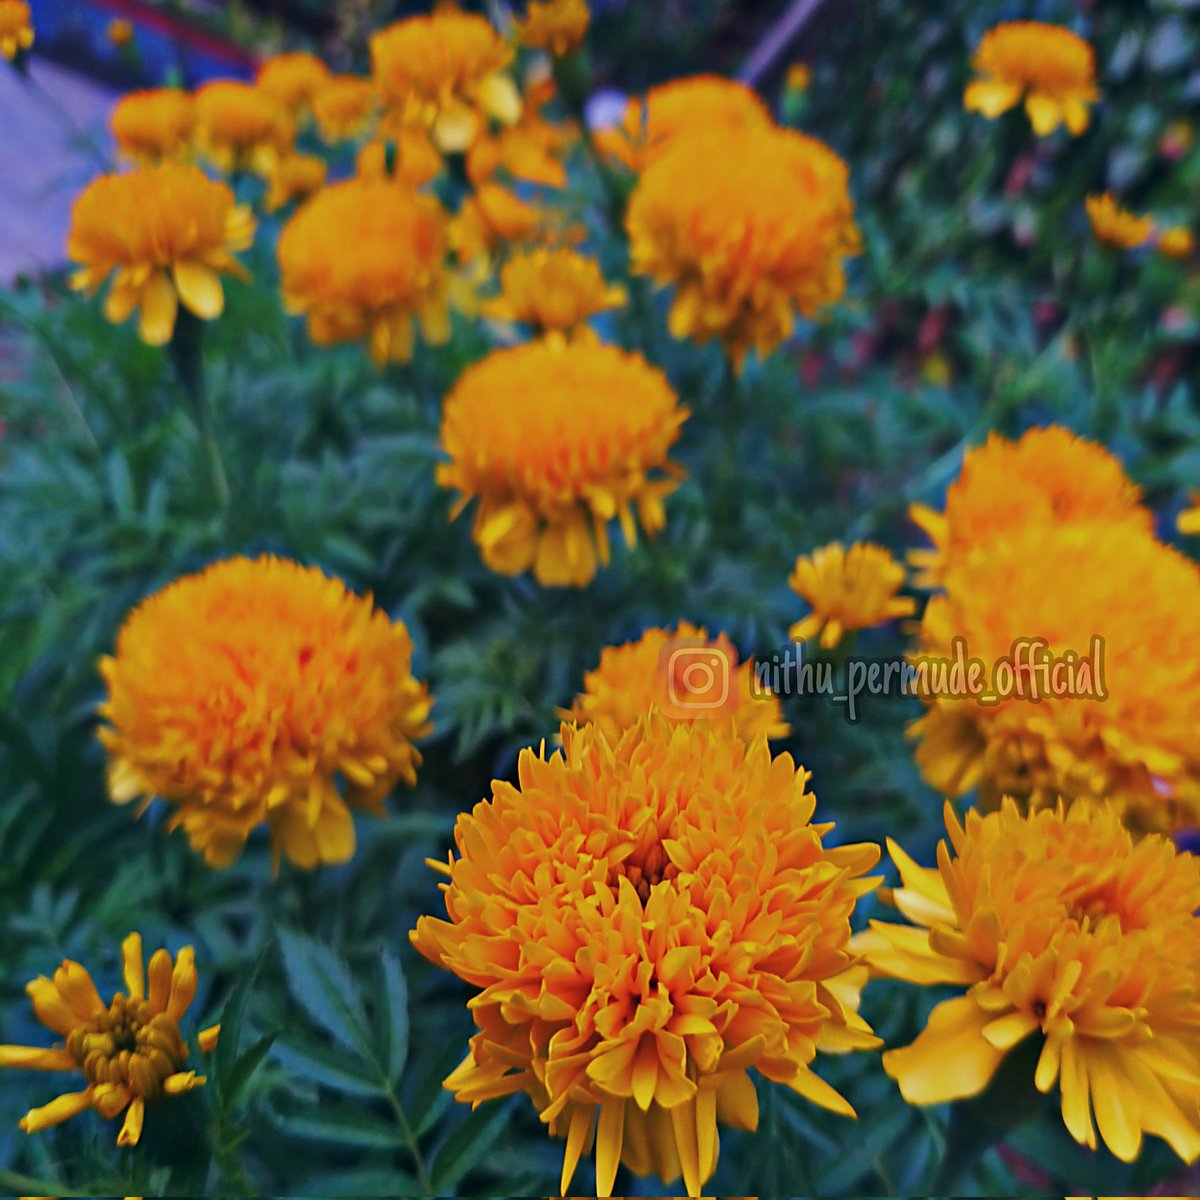 #yellowflowers #flowergarden #flowerphotography #mobilephotography #naturephotography #nithupermudephotography